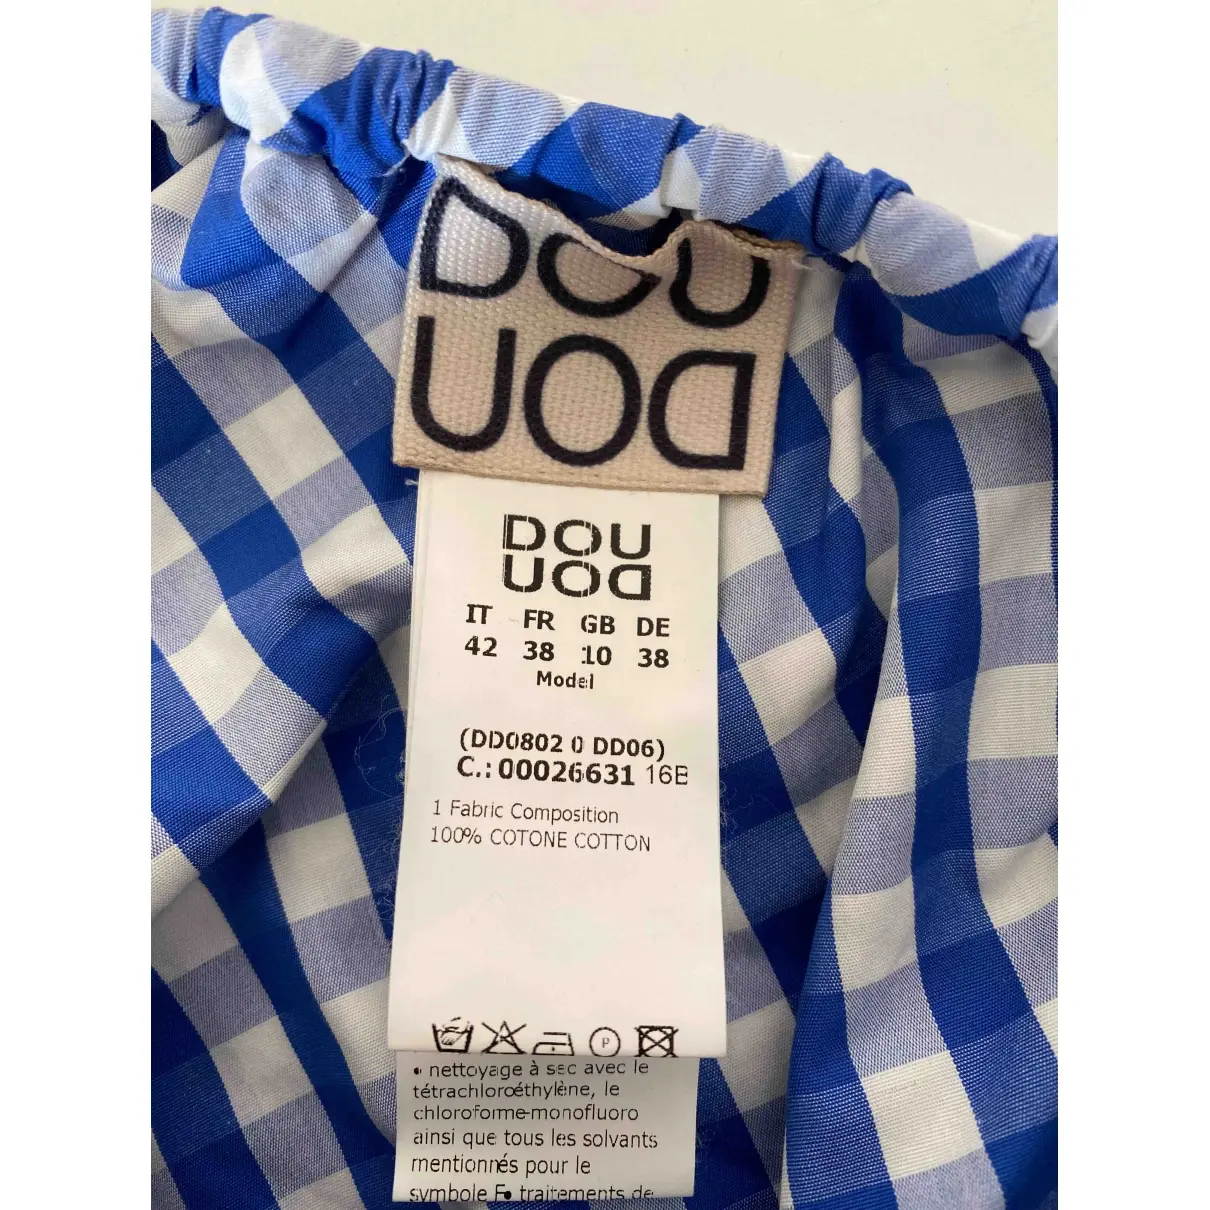 Buy Douuod Two-piece swimsuit online